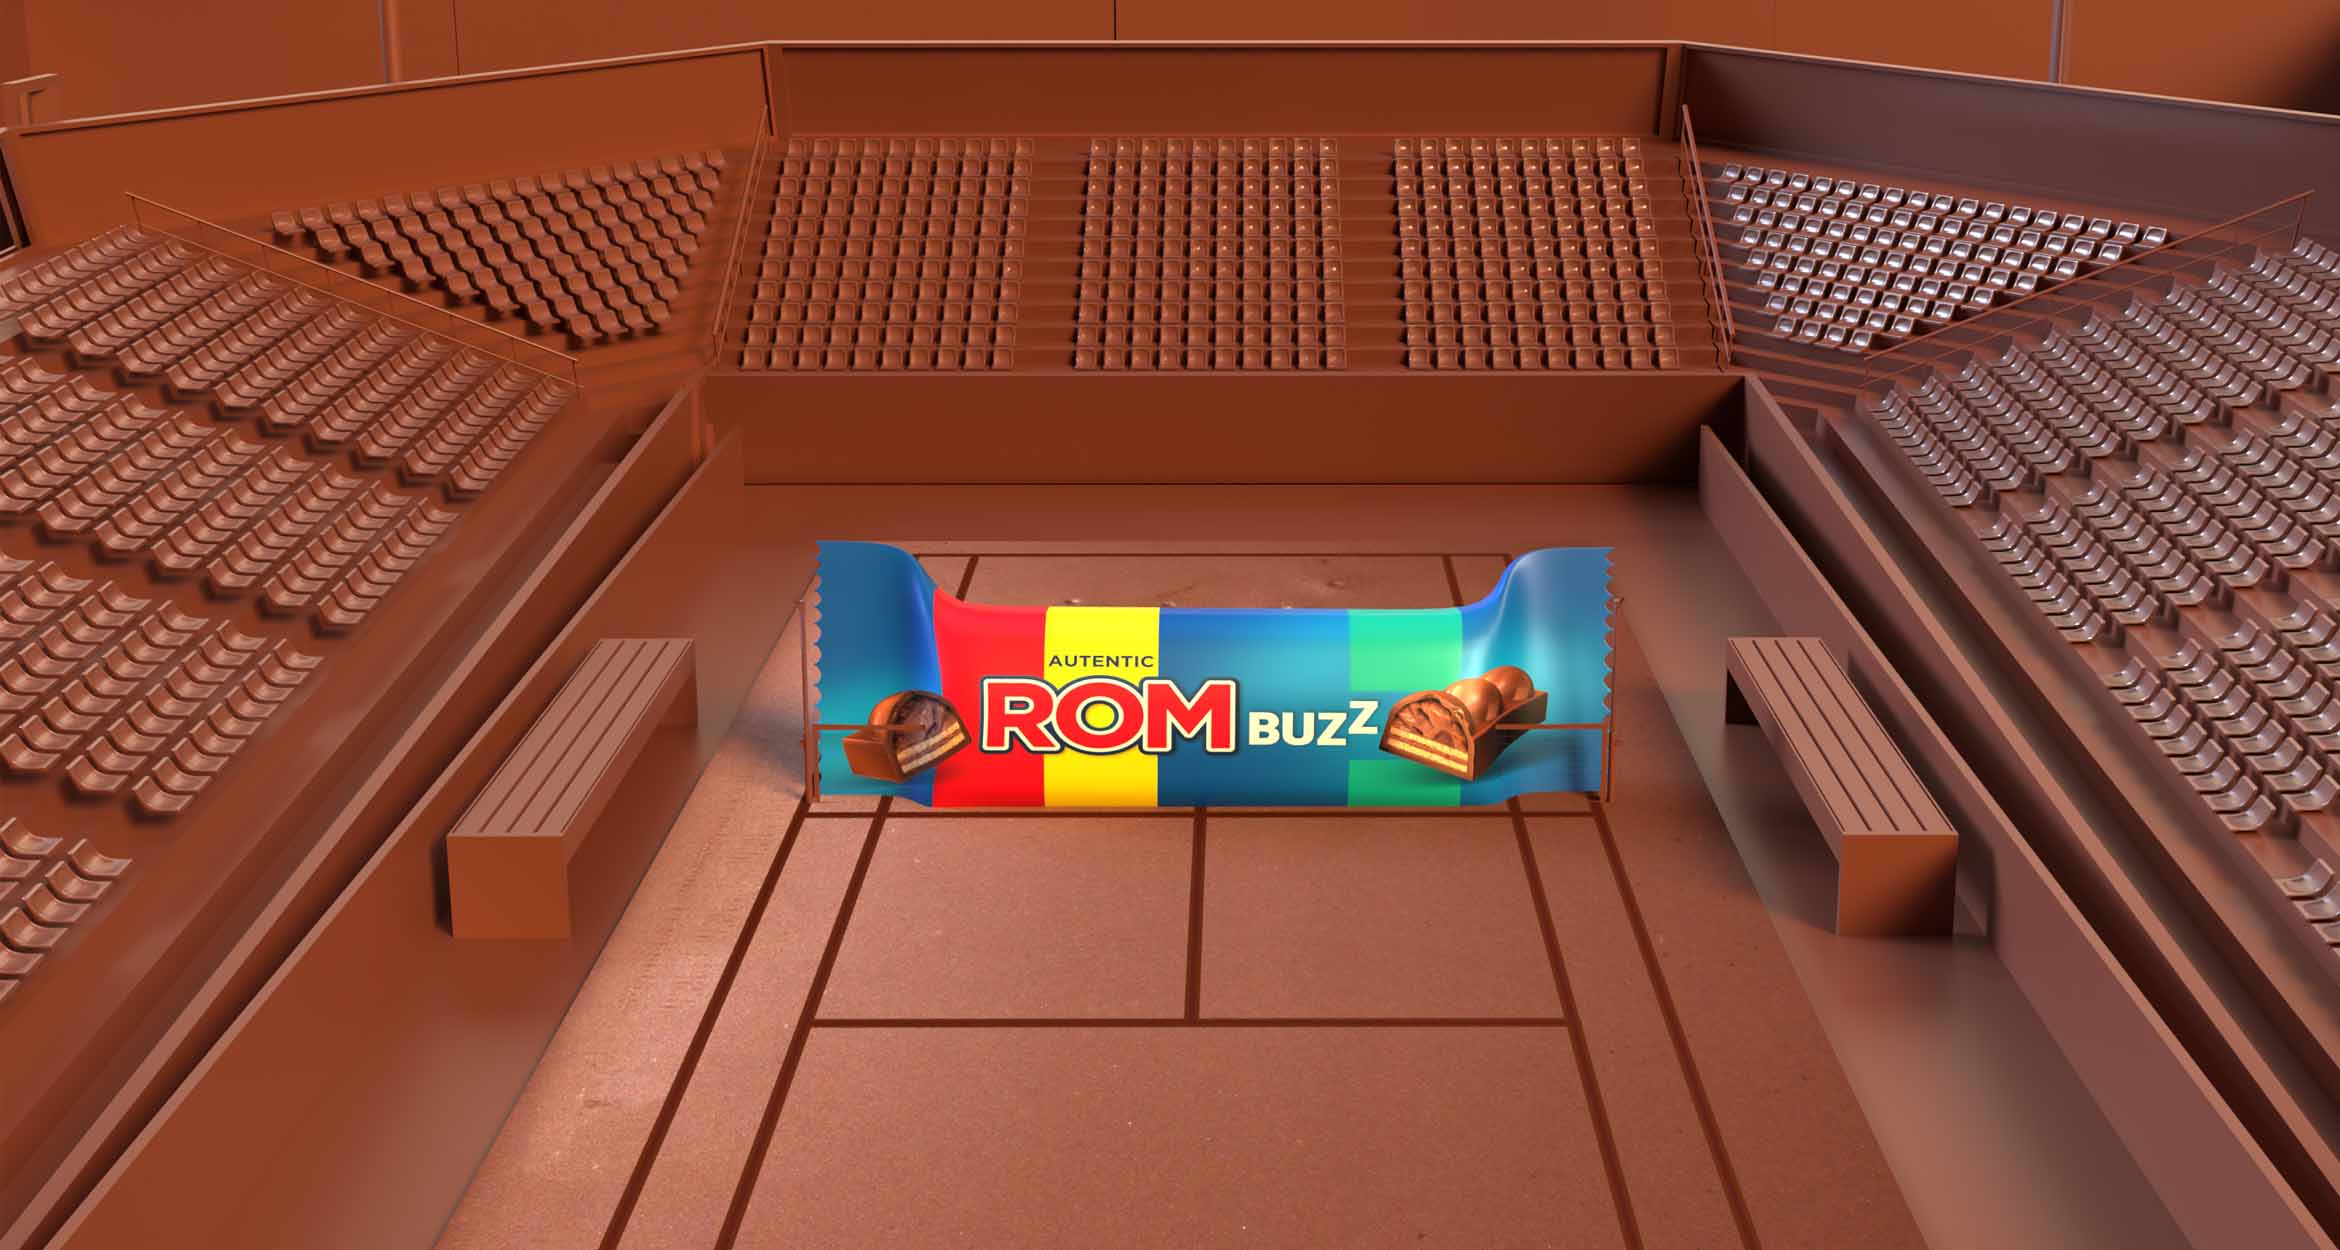 ROM Buzz candy bar in chocolate tennis stadium